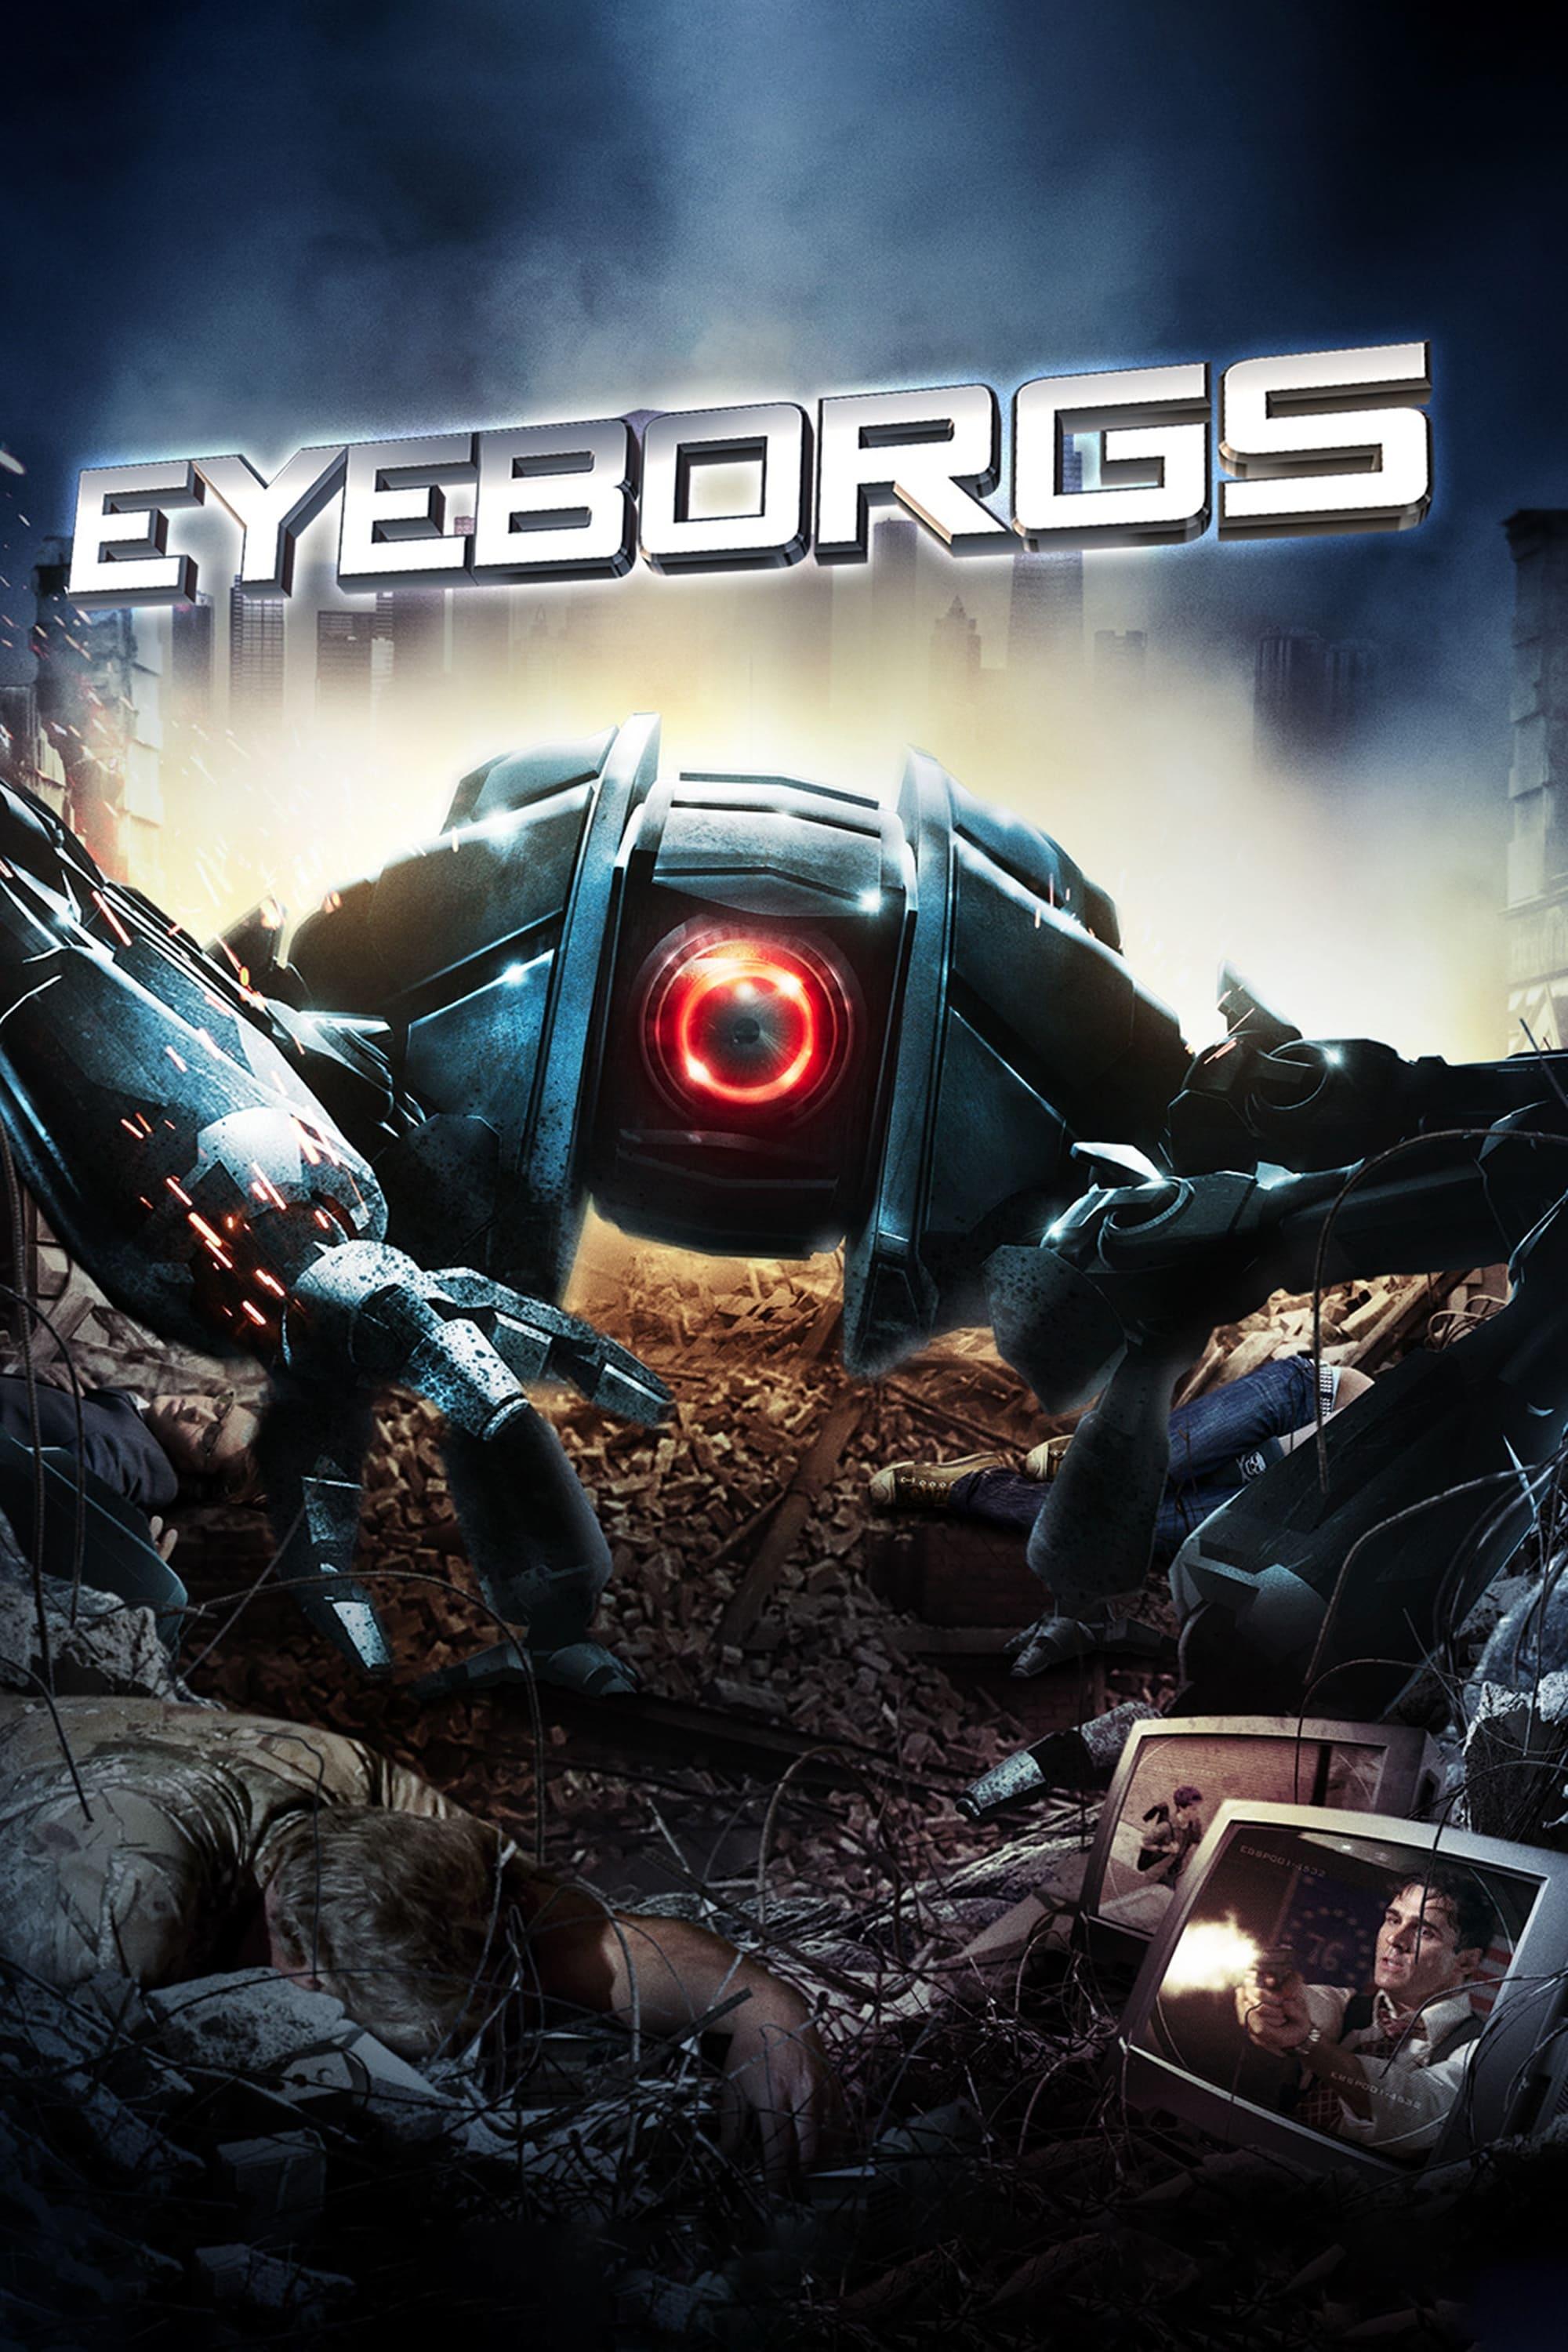 Eyeborgs poster